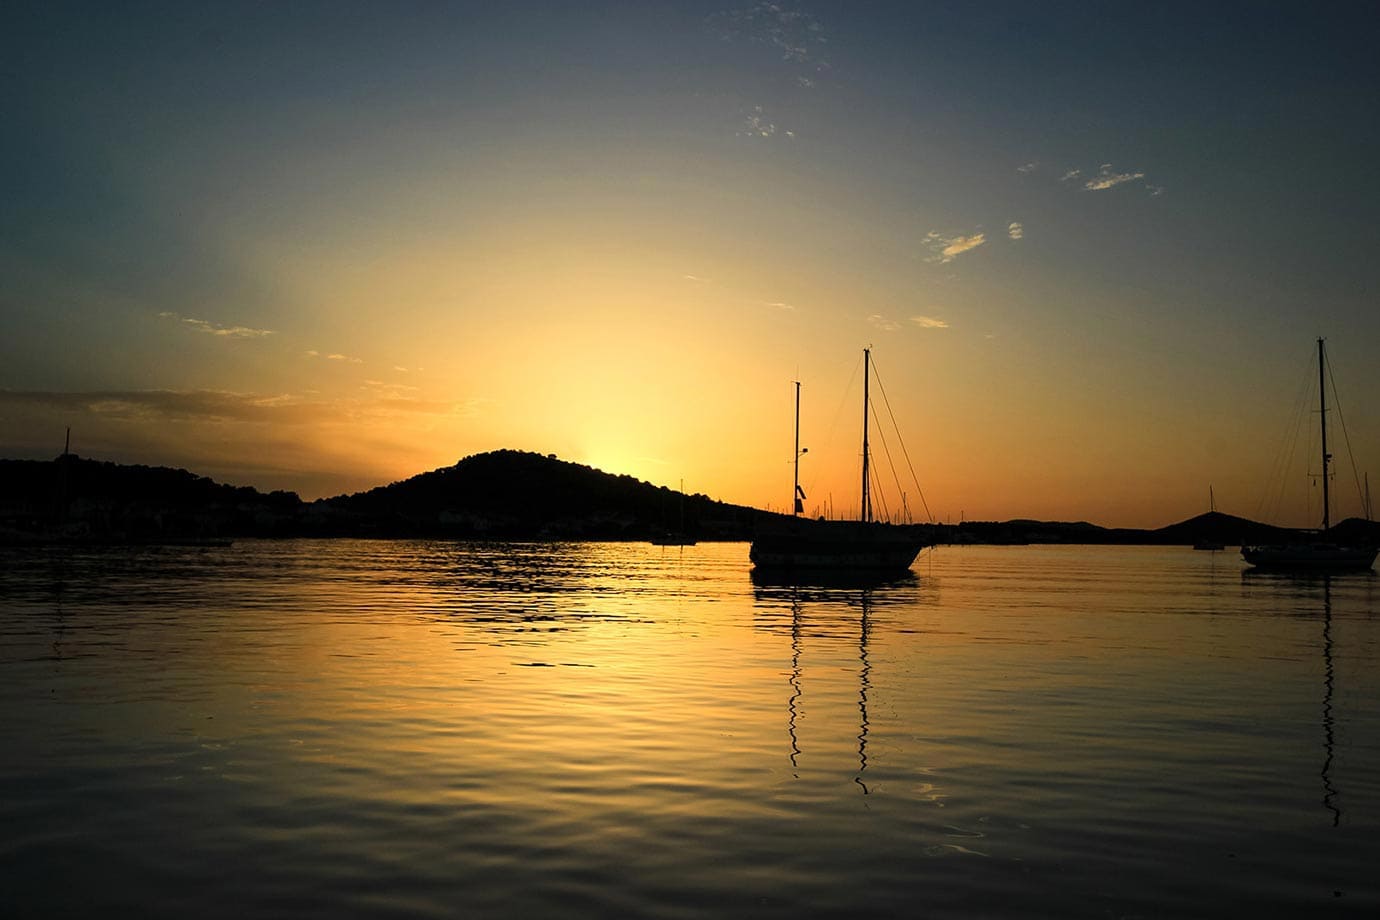 Sunset over boats in Croatia